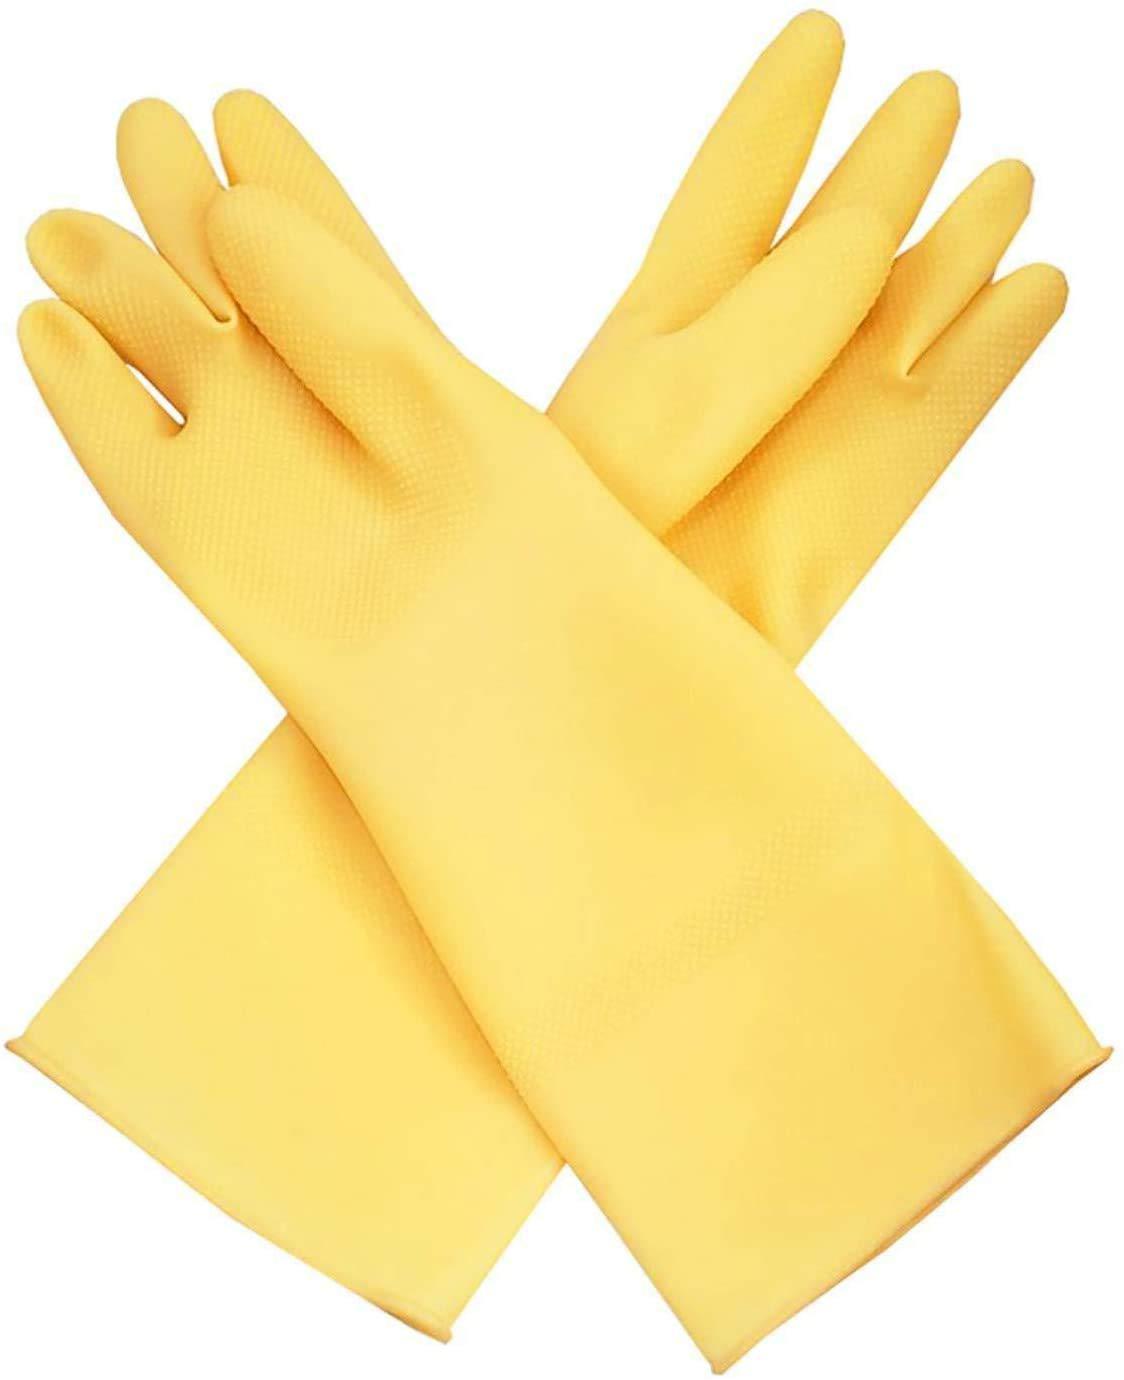 sunrise carnation latex glove for dish washing/cleaning/multi purposes #400 (1)